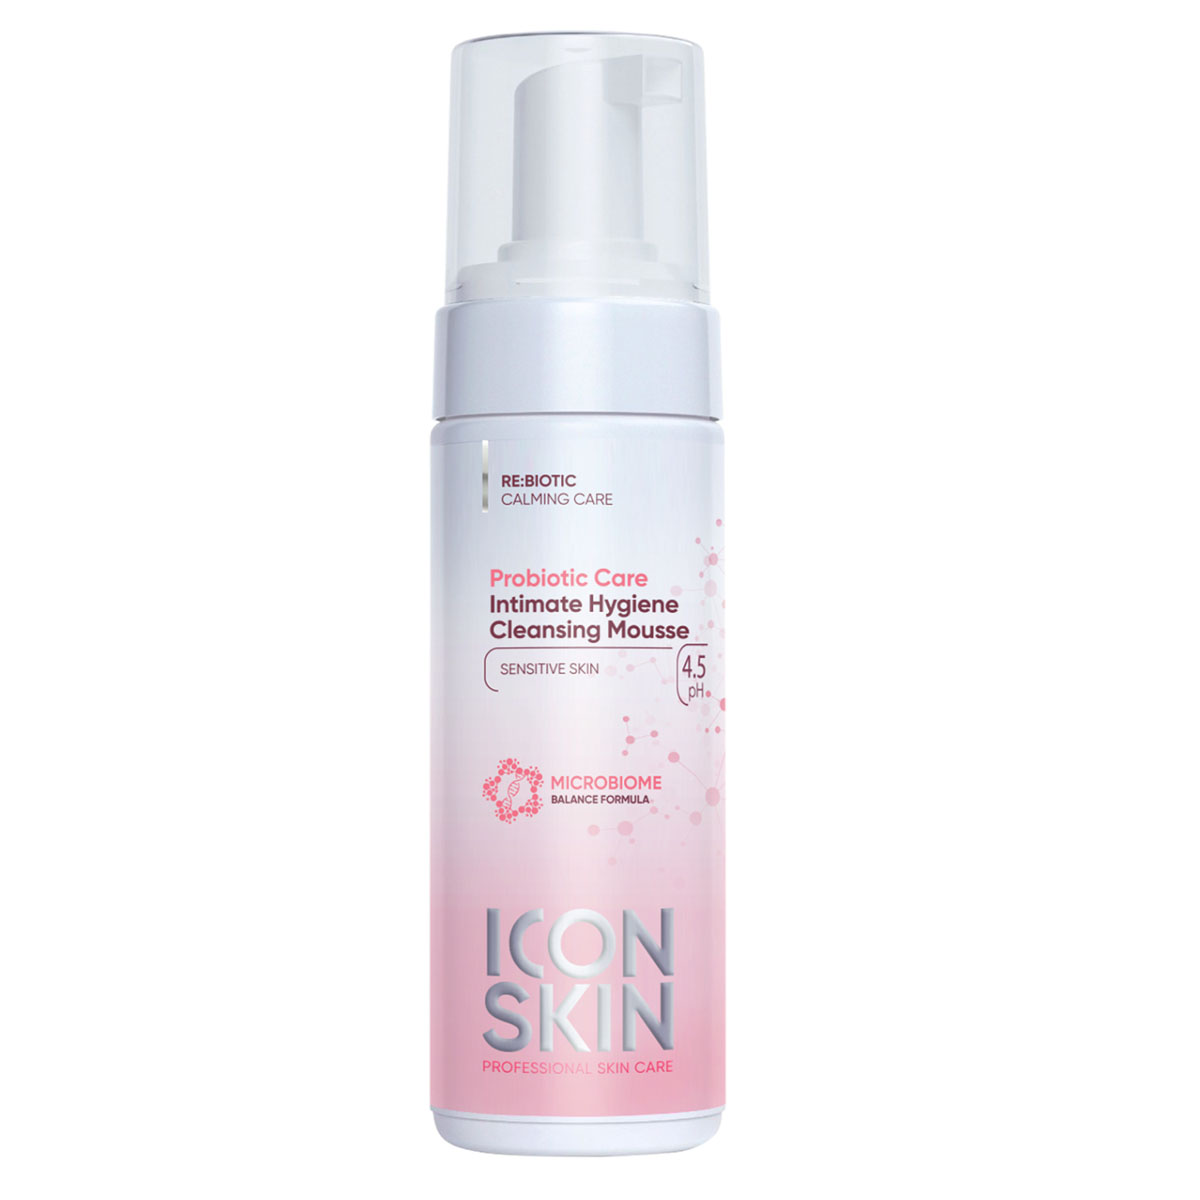 Icon Skin Мусс для интимной гигиены Probiotic Care, 175 мл (Icon Skin, Re:Biom) средства для гигиены icon skin мусс для интимной гигиены probiotic care